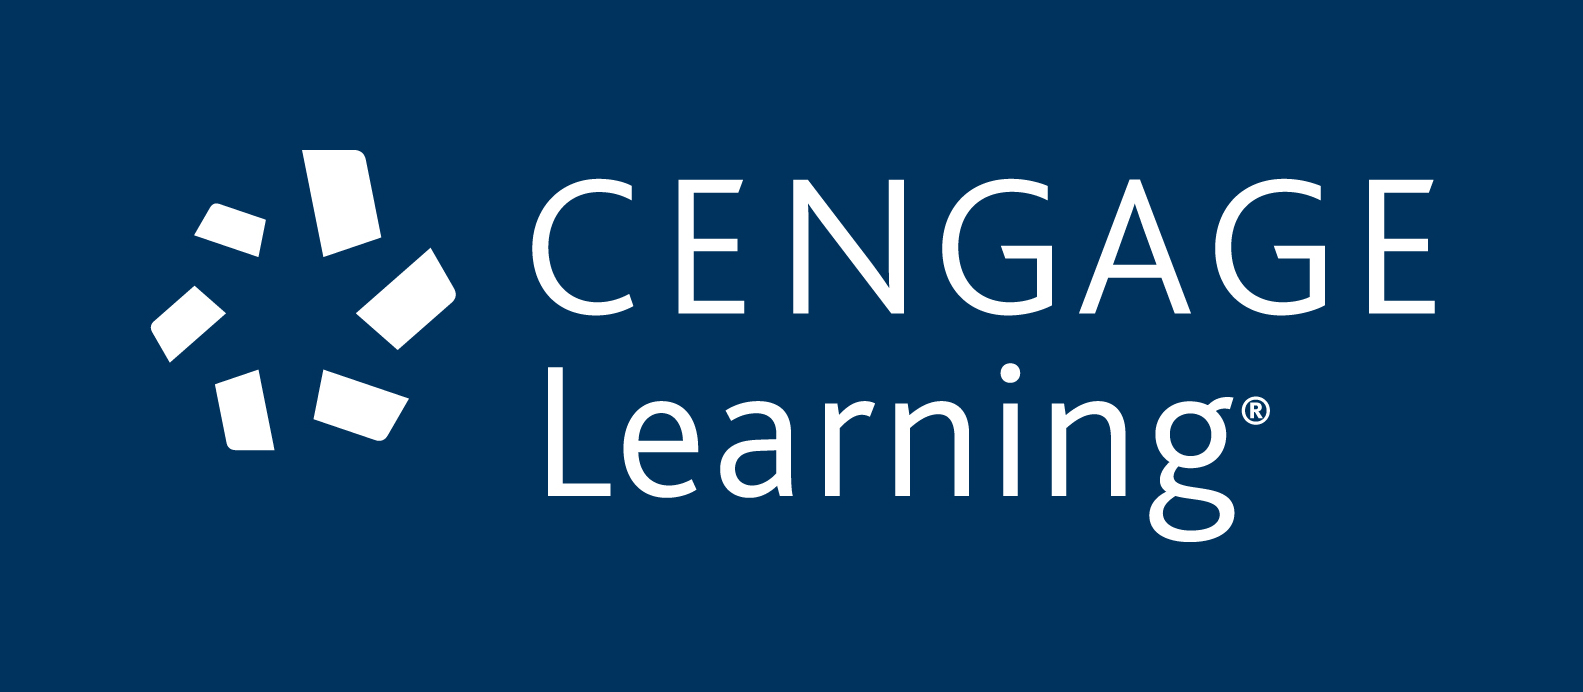 cengage learning.jpg